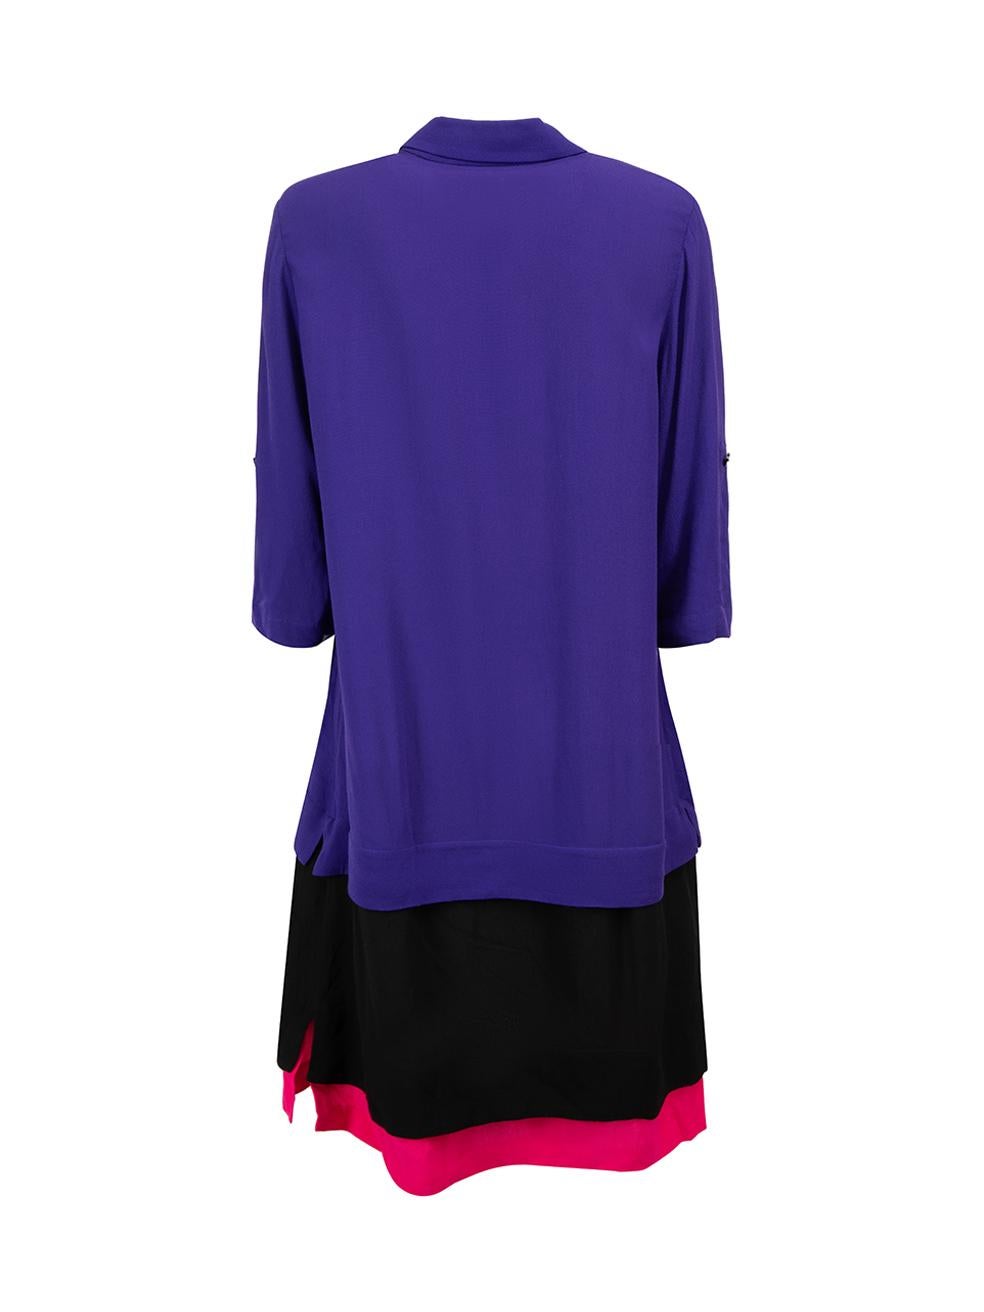 Purple Colour Block New Hatsu Layered Collar Dress Size M In Good Condition For Sale In London, GB